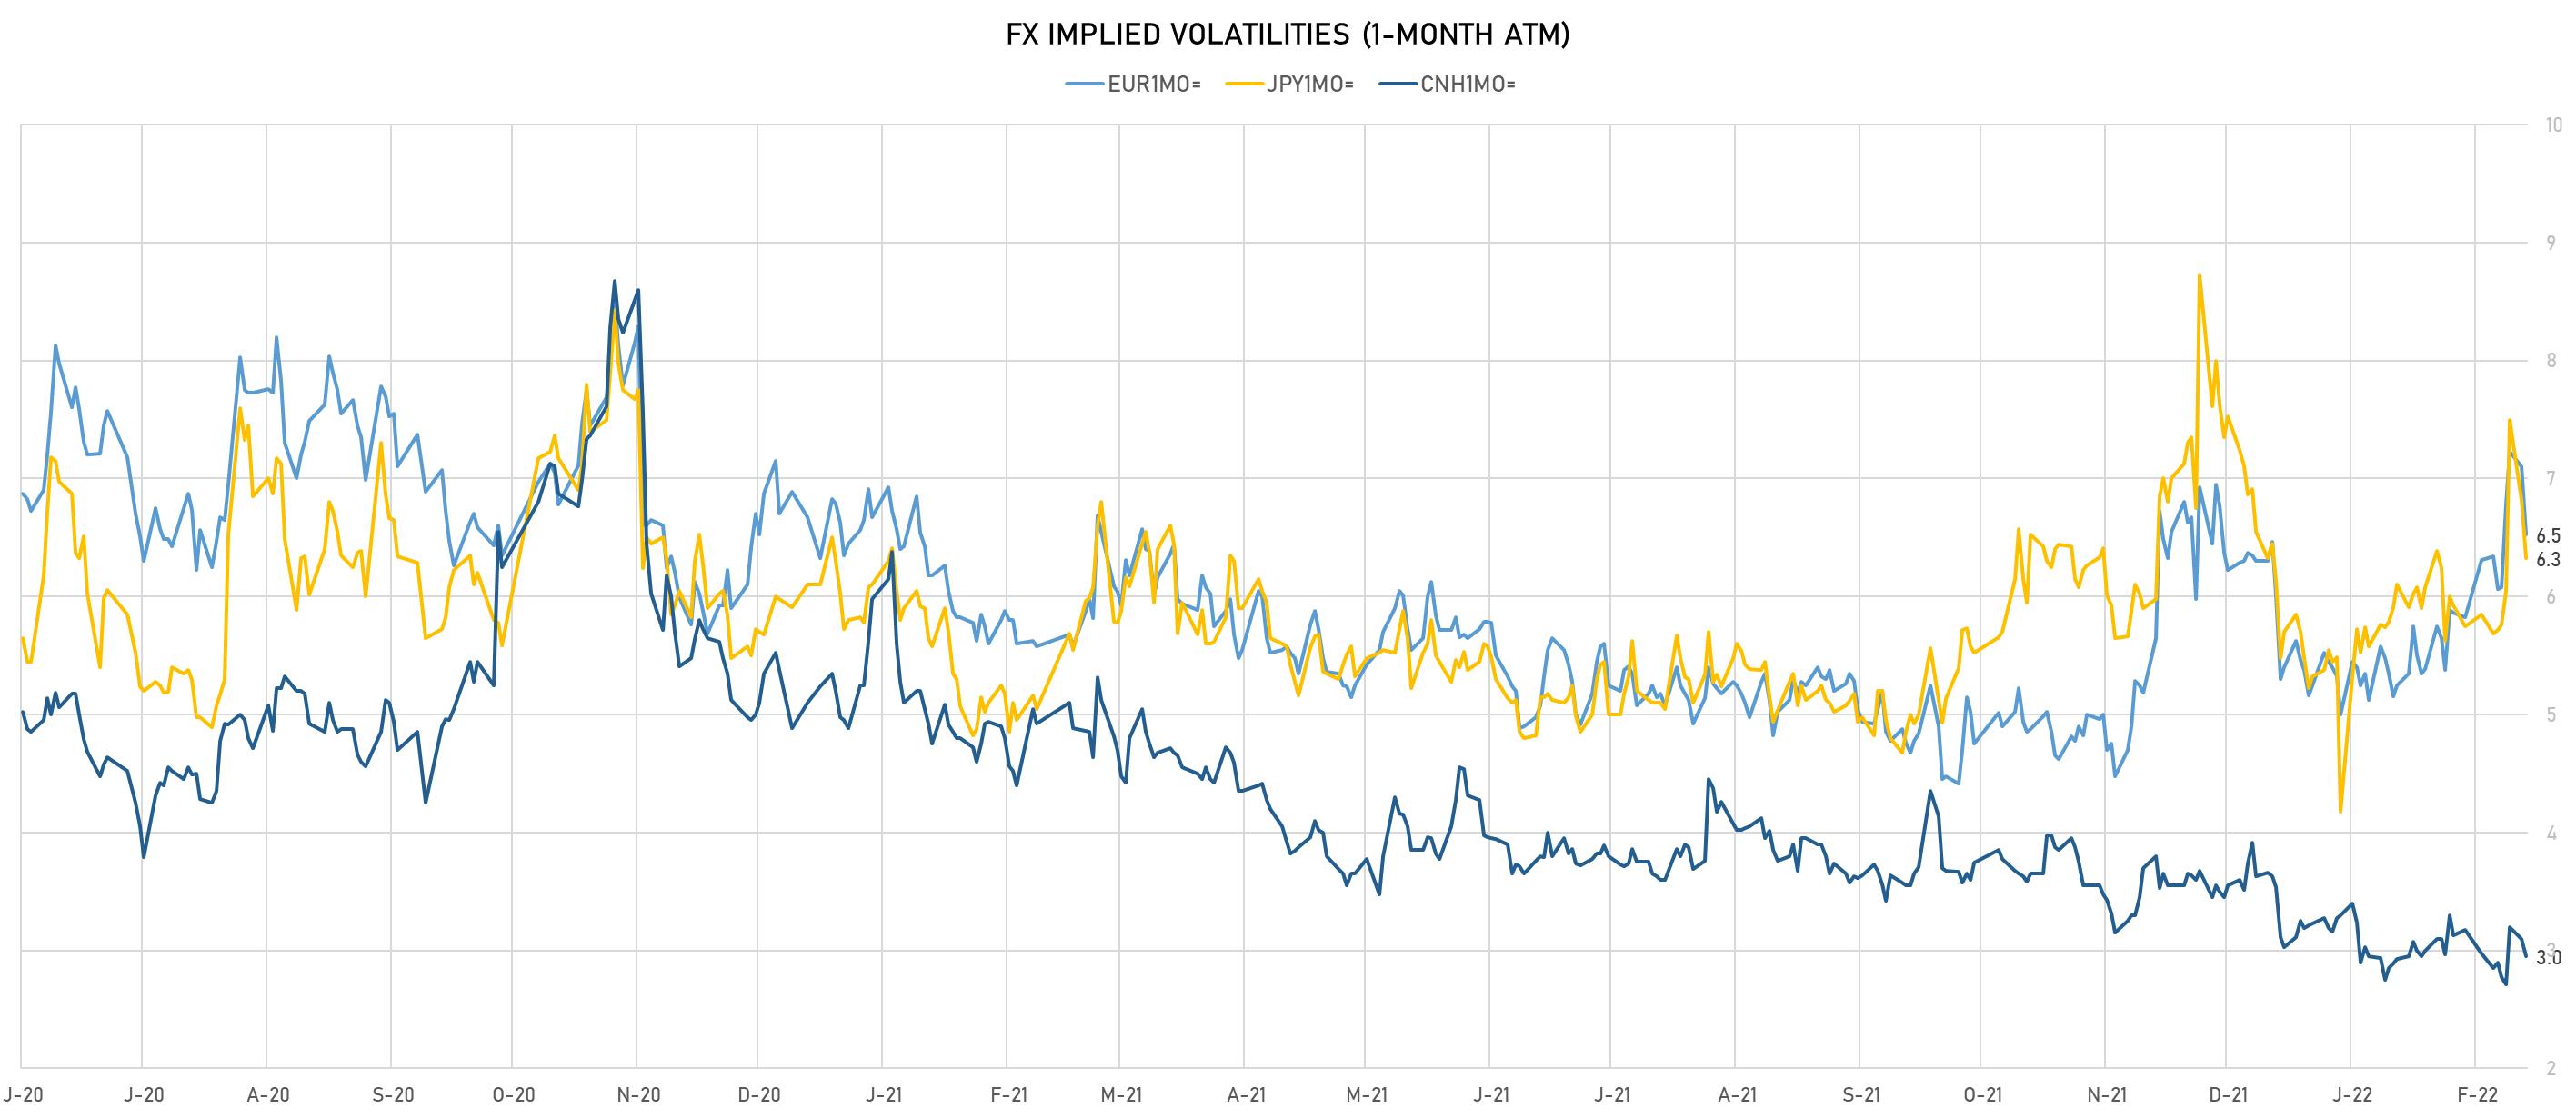 EUR, CNH, JPY 1-Month ATM Implied Volatilities | Sources: phipost.com, Refinitiv data